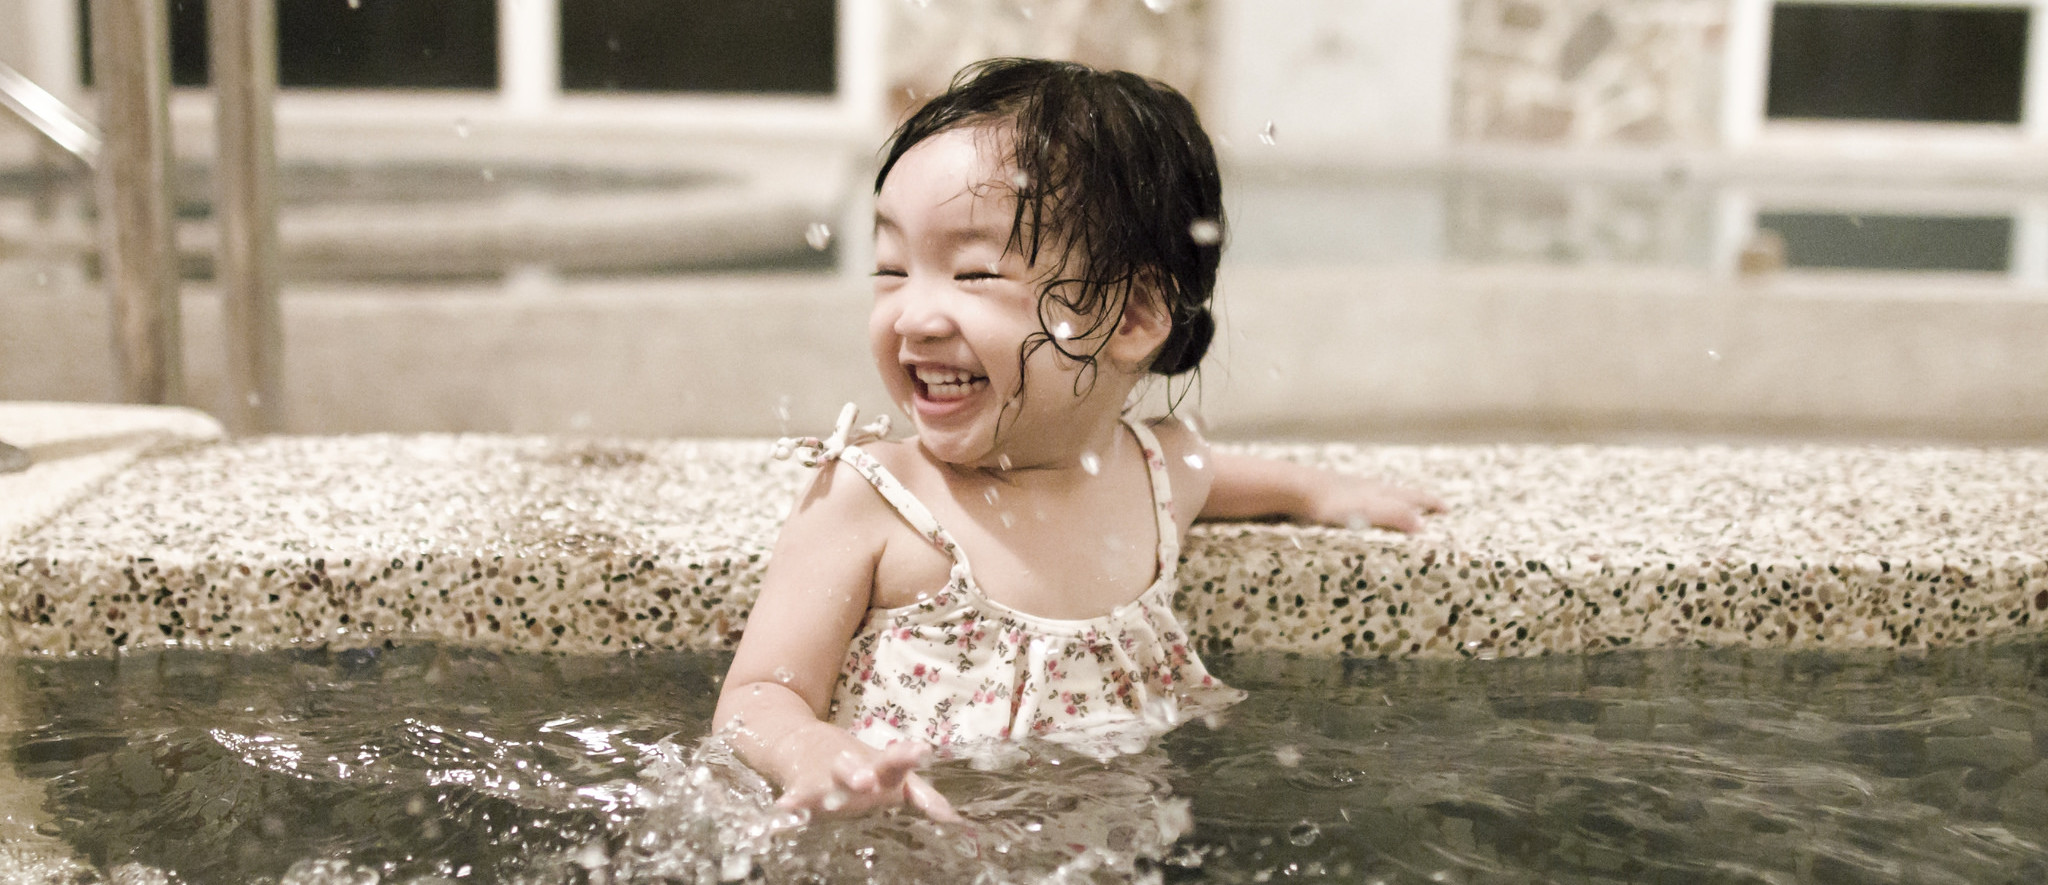 enjoy the spa by Aikawa Ke on flickr --https://flic.kr/p/khymkT